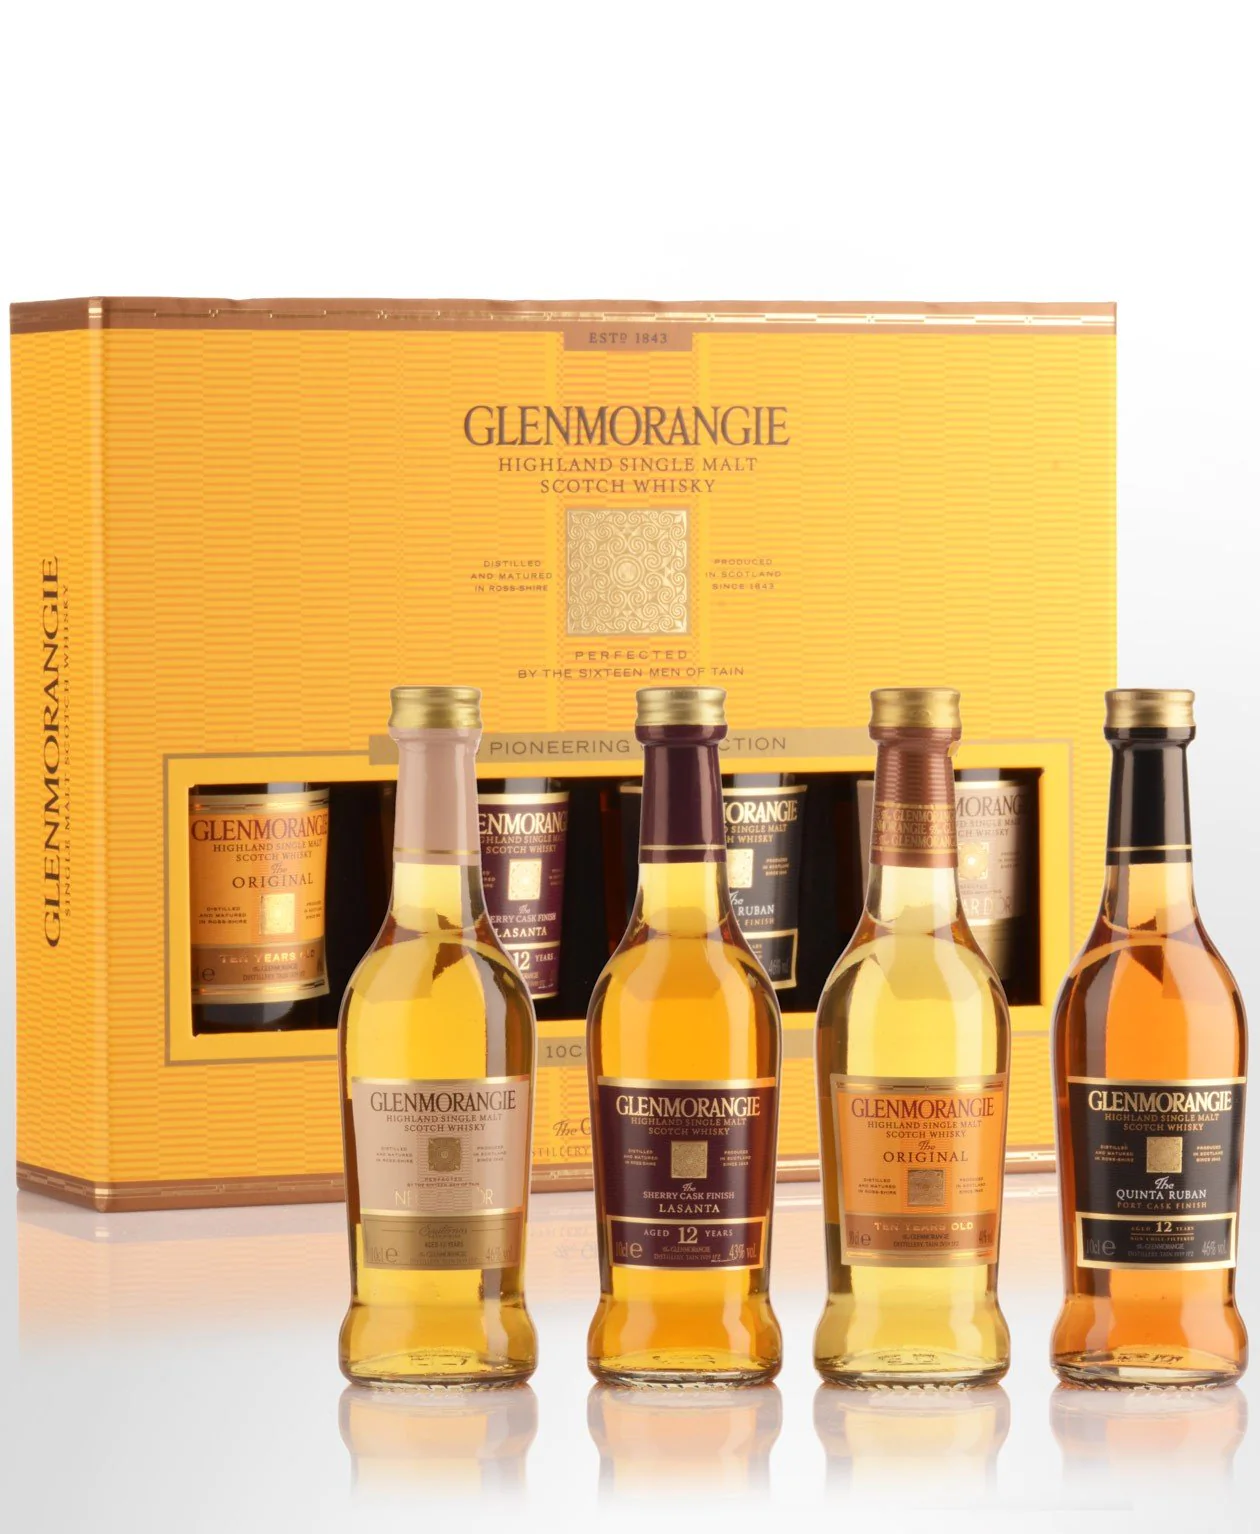 Glenmorangie Nectar D'or 12 Year Old Sauternes Cask Finish Highland Single  Malt Scotch Whisky